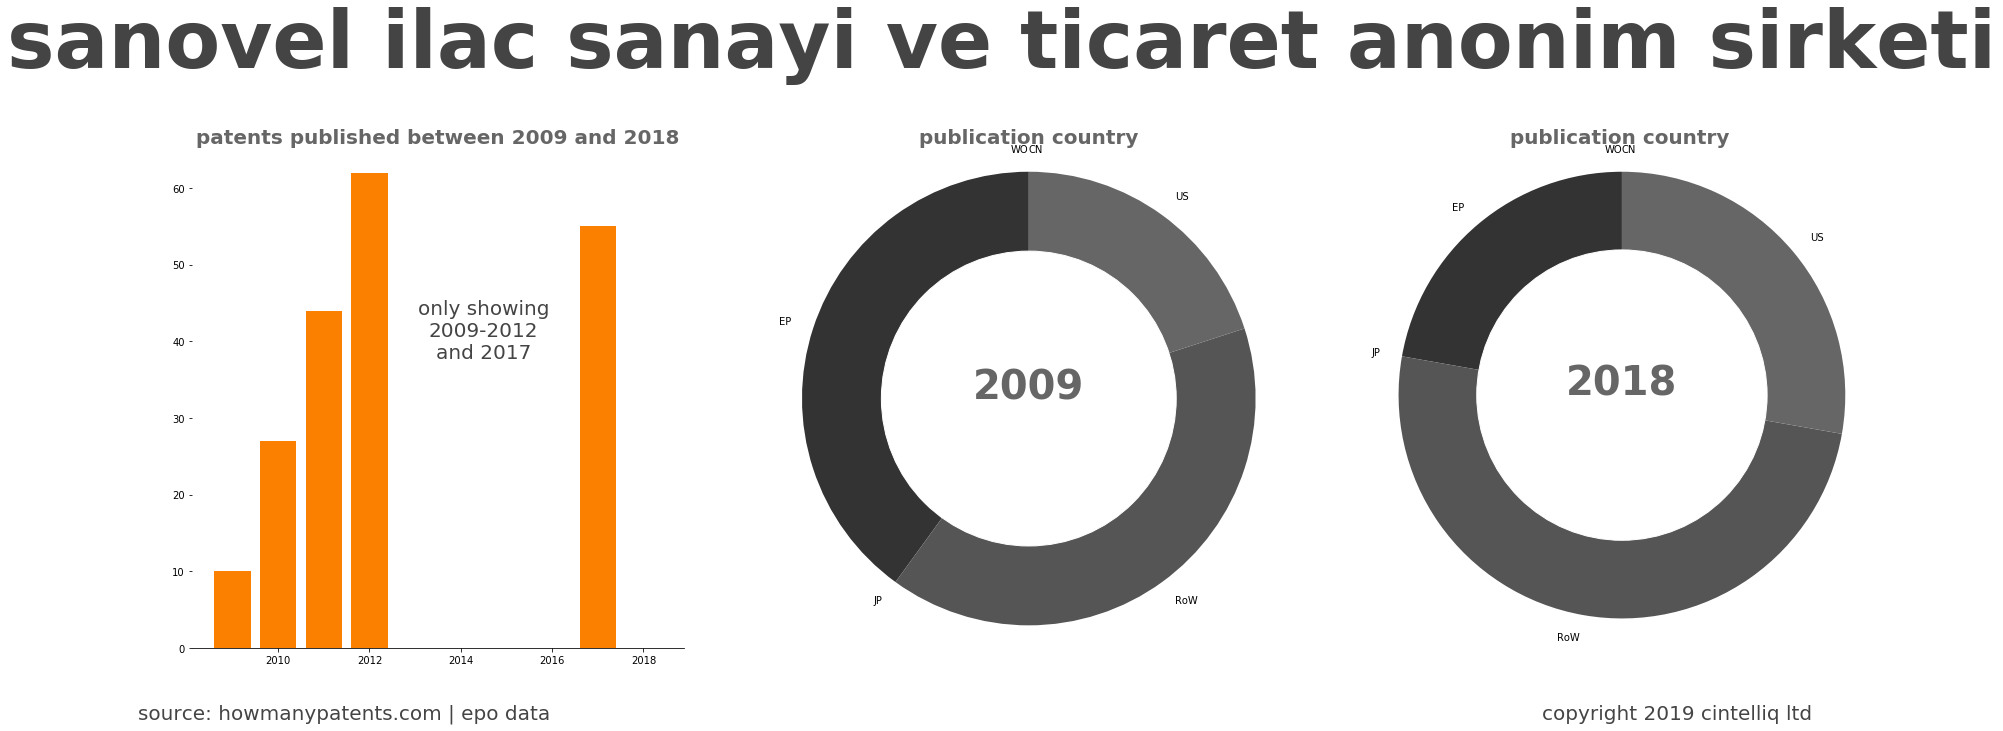 summary of patents for Sanovel Ilac Sanayi Ve Ticaret Anonim Sirketi